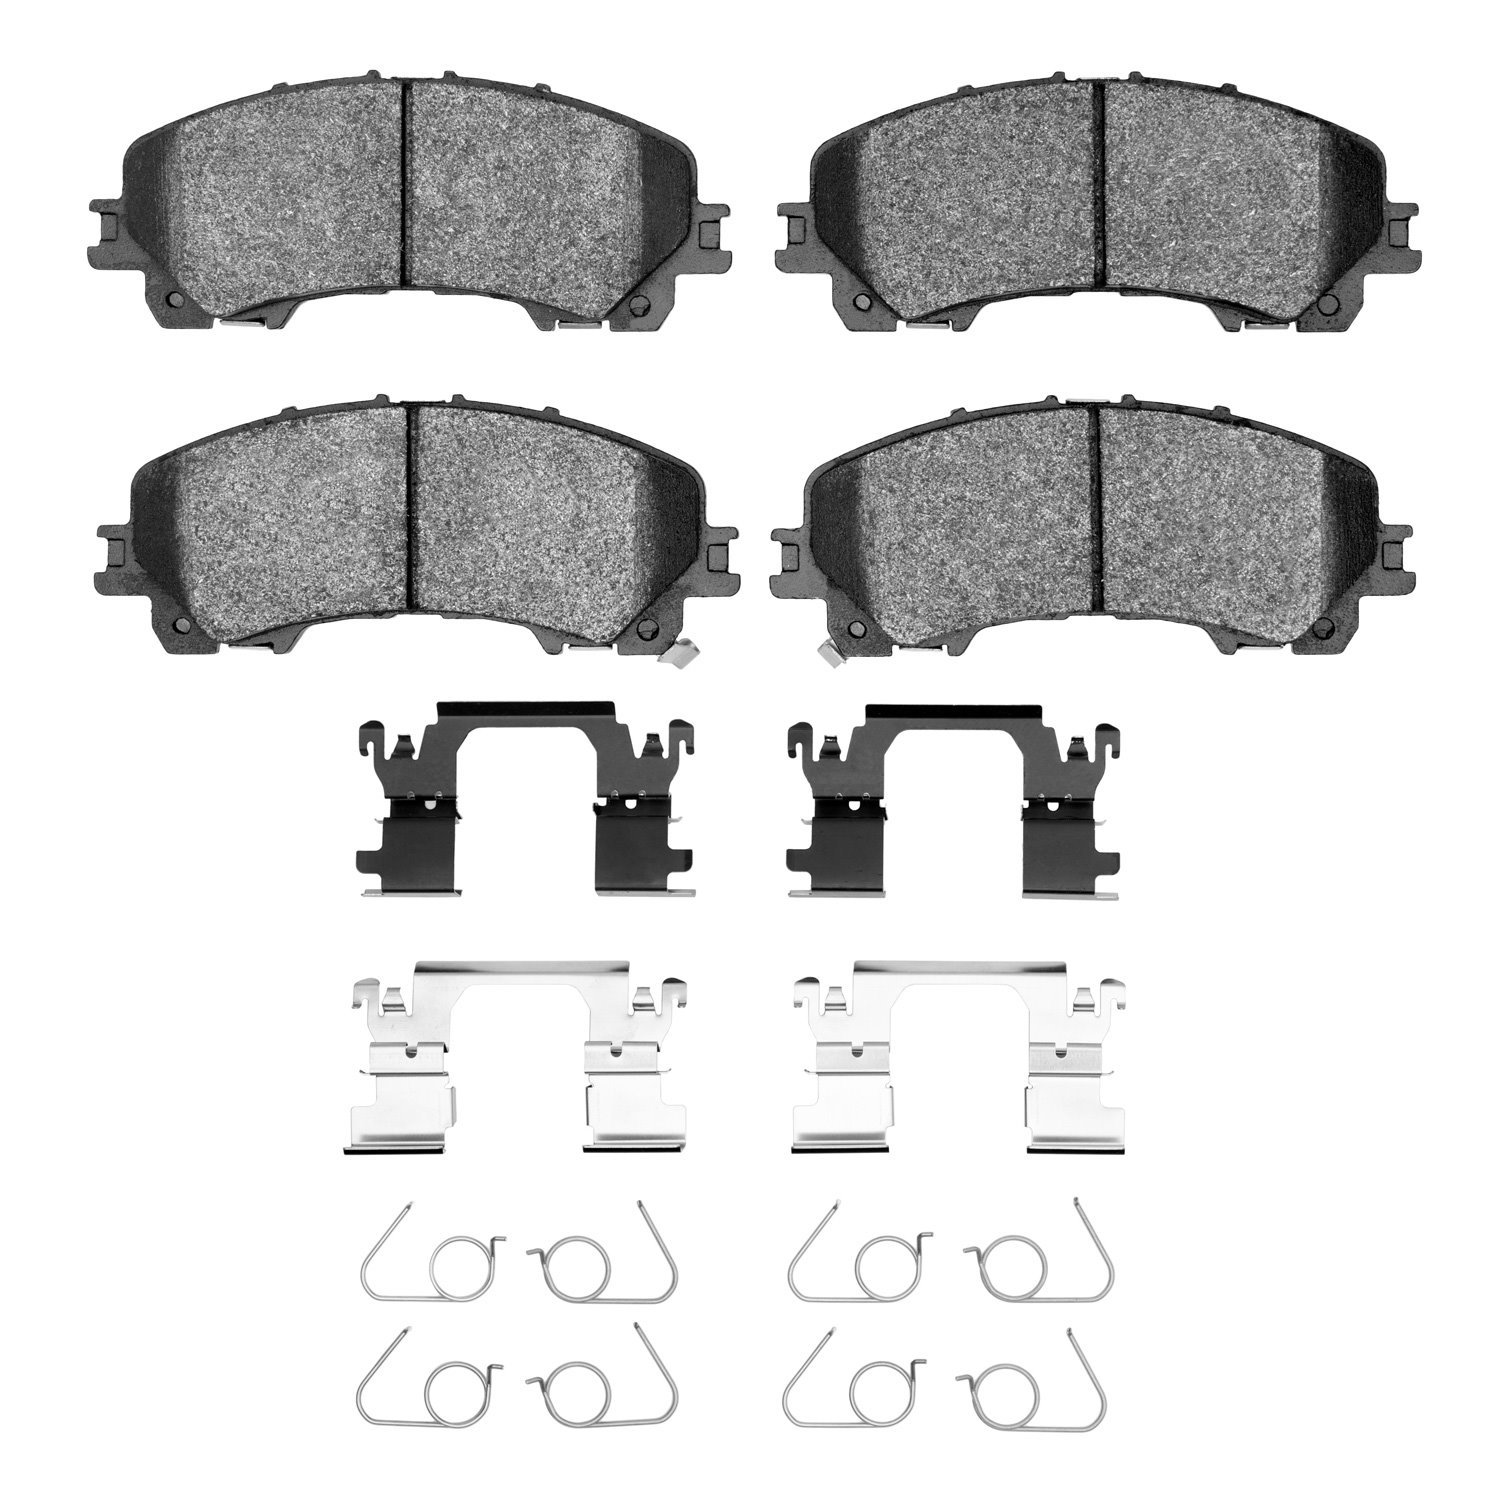 1310-1736-01 3000-Series Ceramic Brake Pads & Hardware Kit, Fits Select Infiniti/Nissan, Position: Front